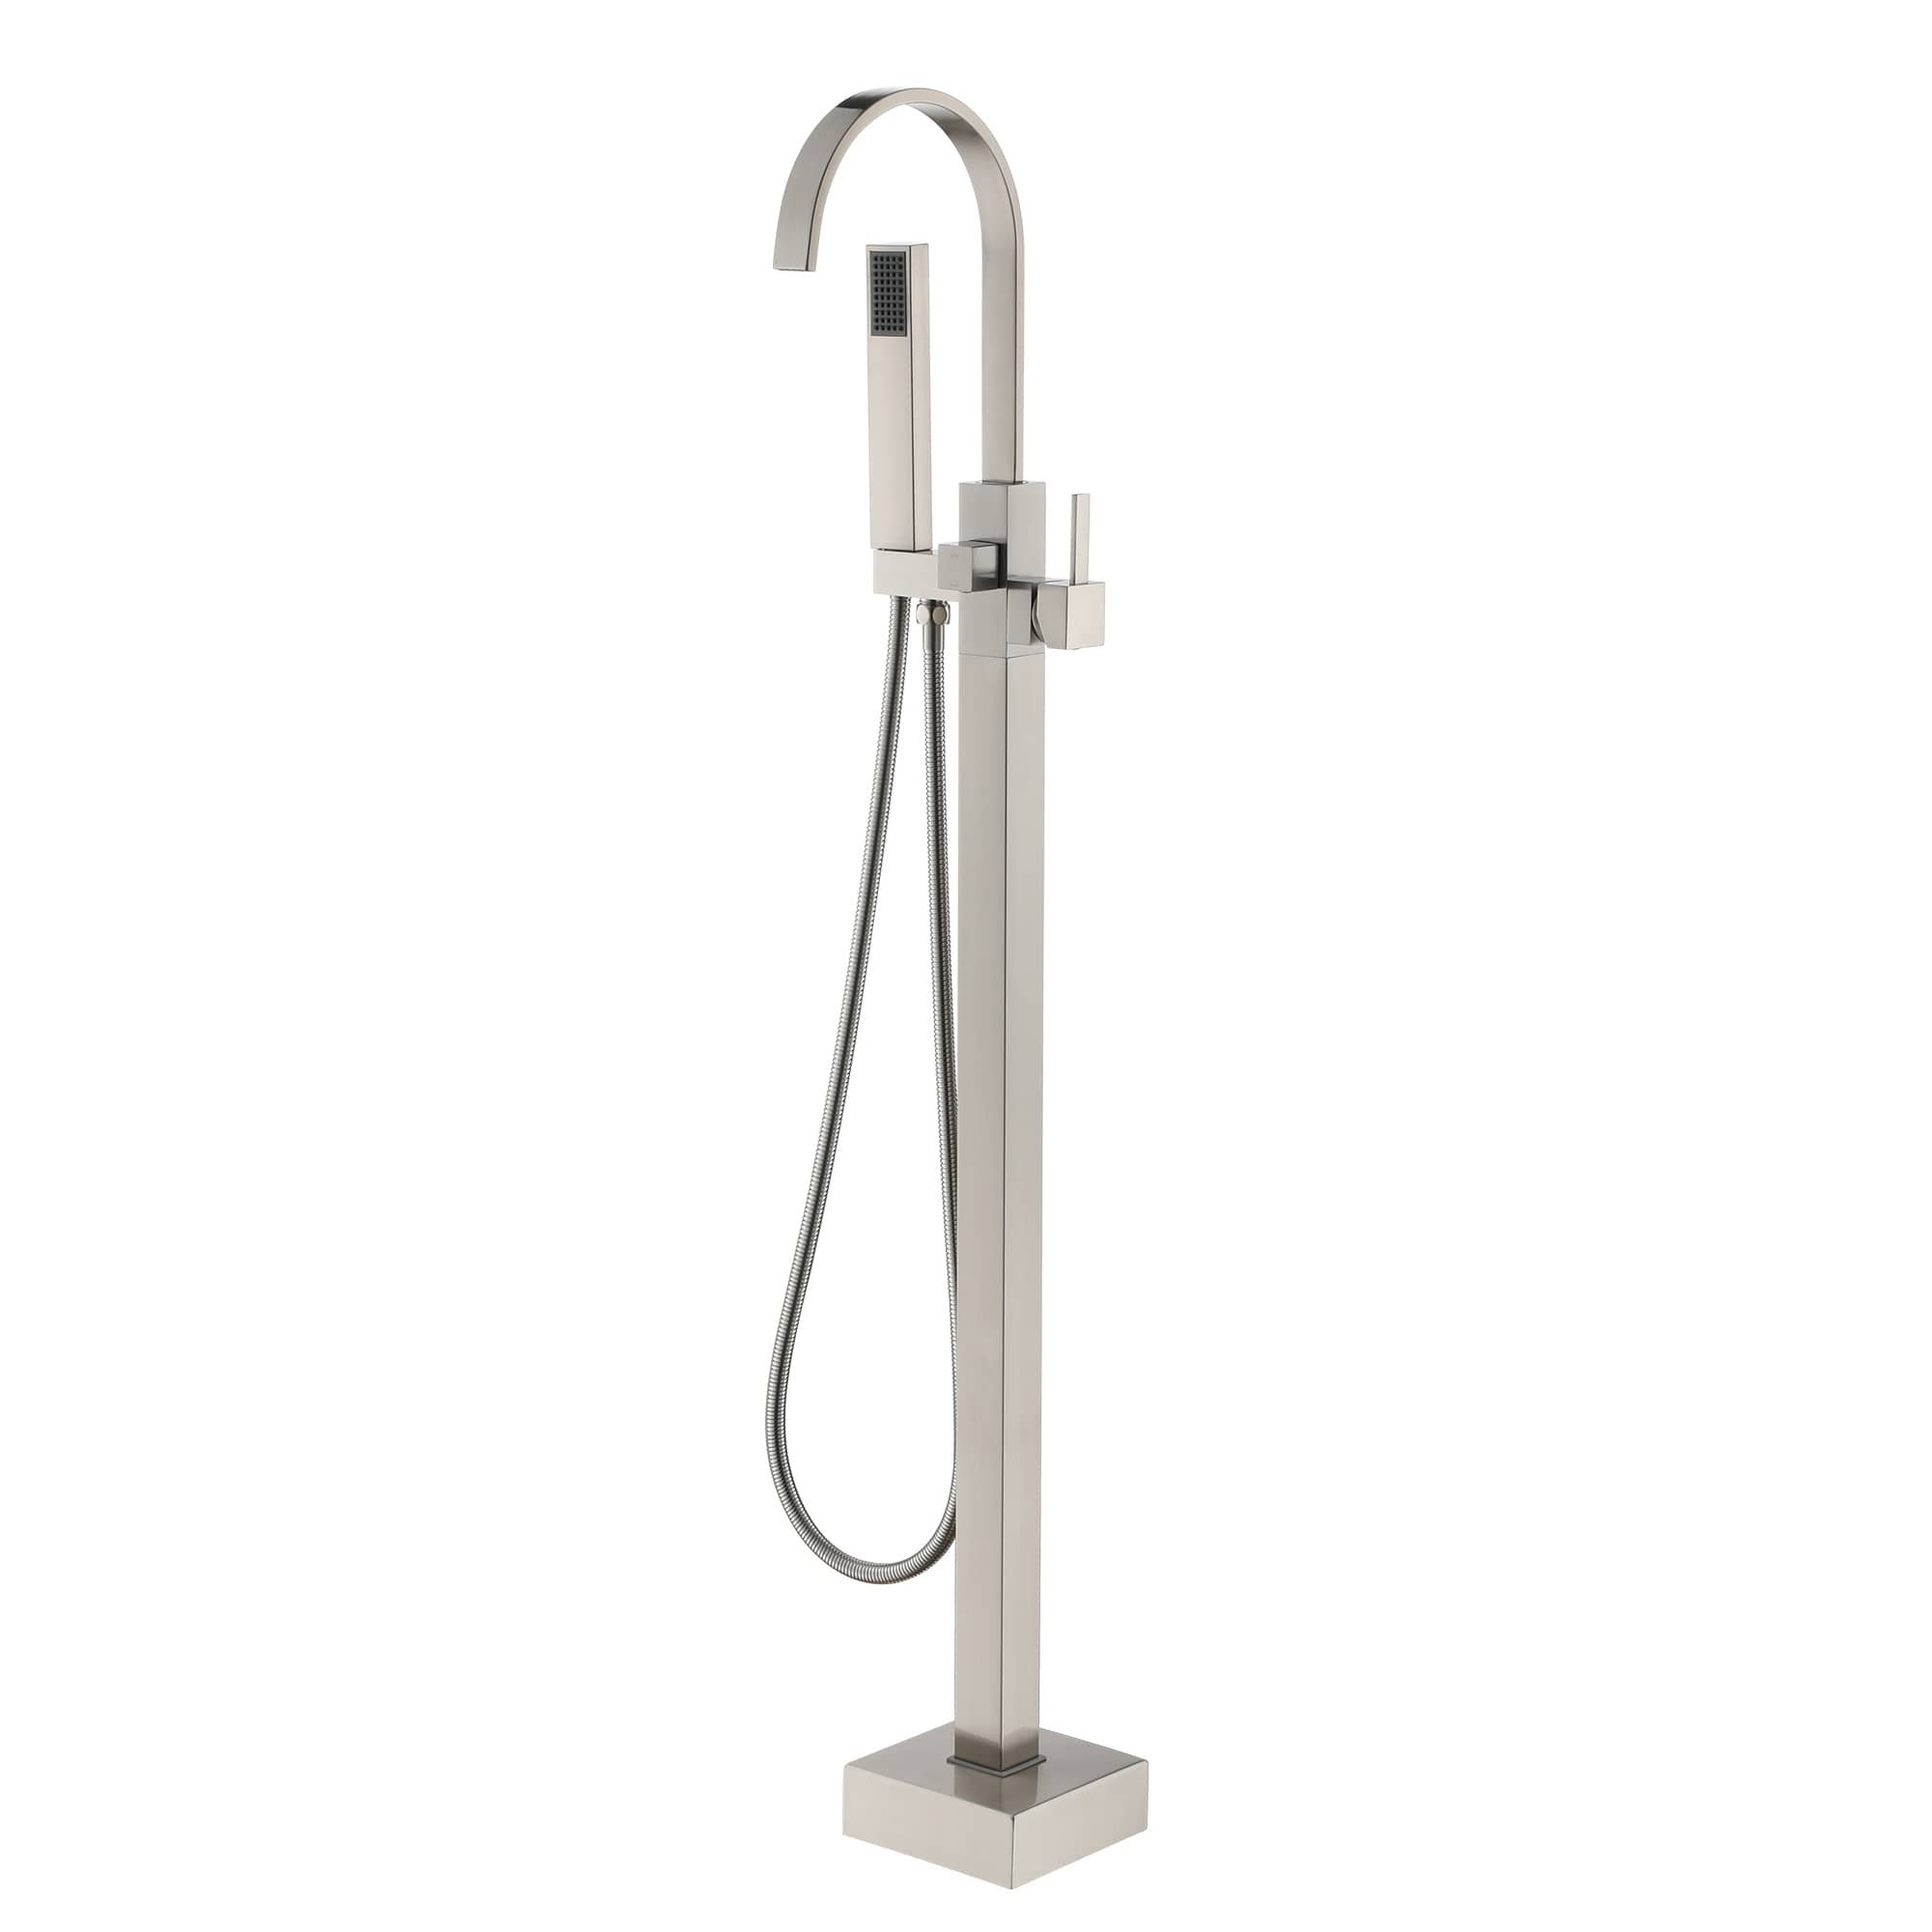 CASAINC 1-Handle Freestanding Bathtub Faucet with Hand Shower in Multiple Colors